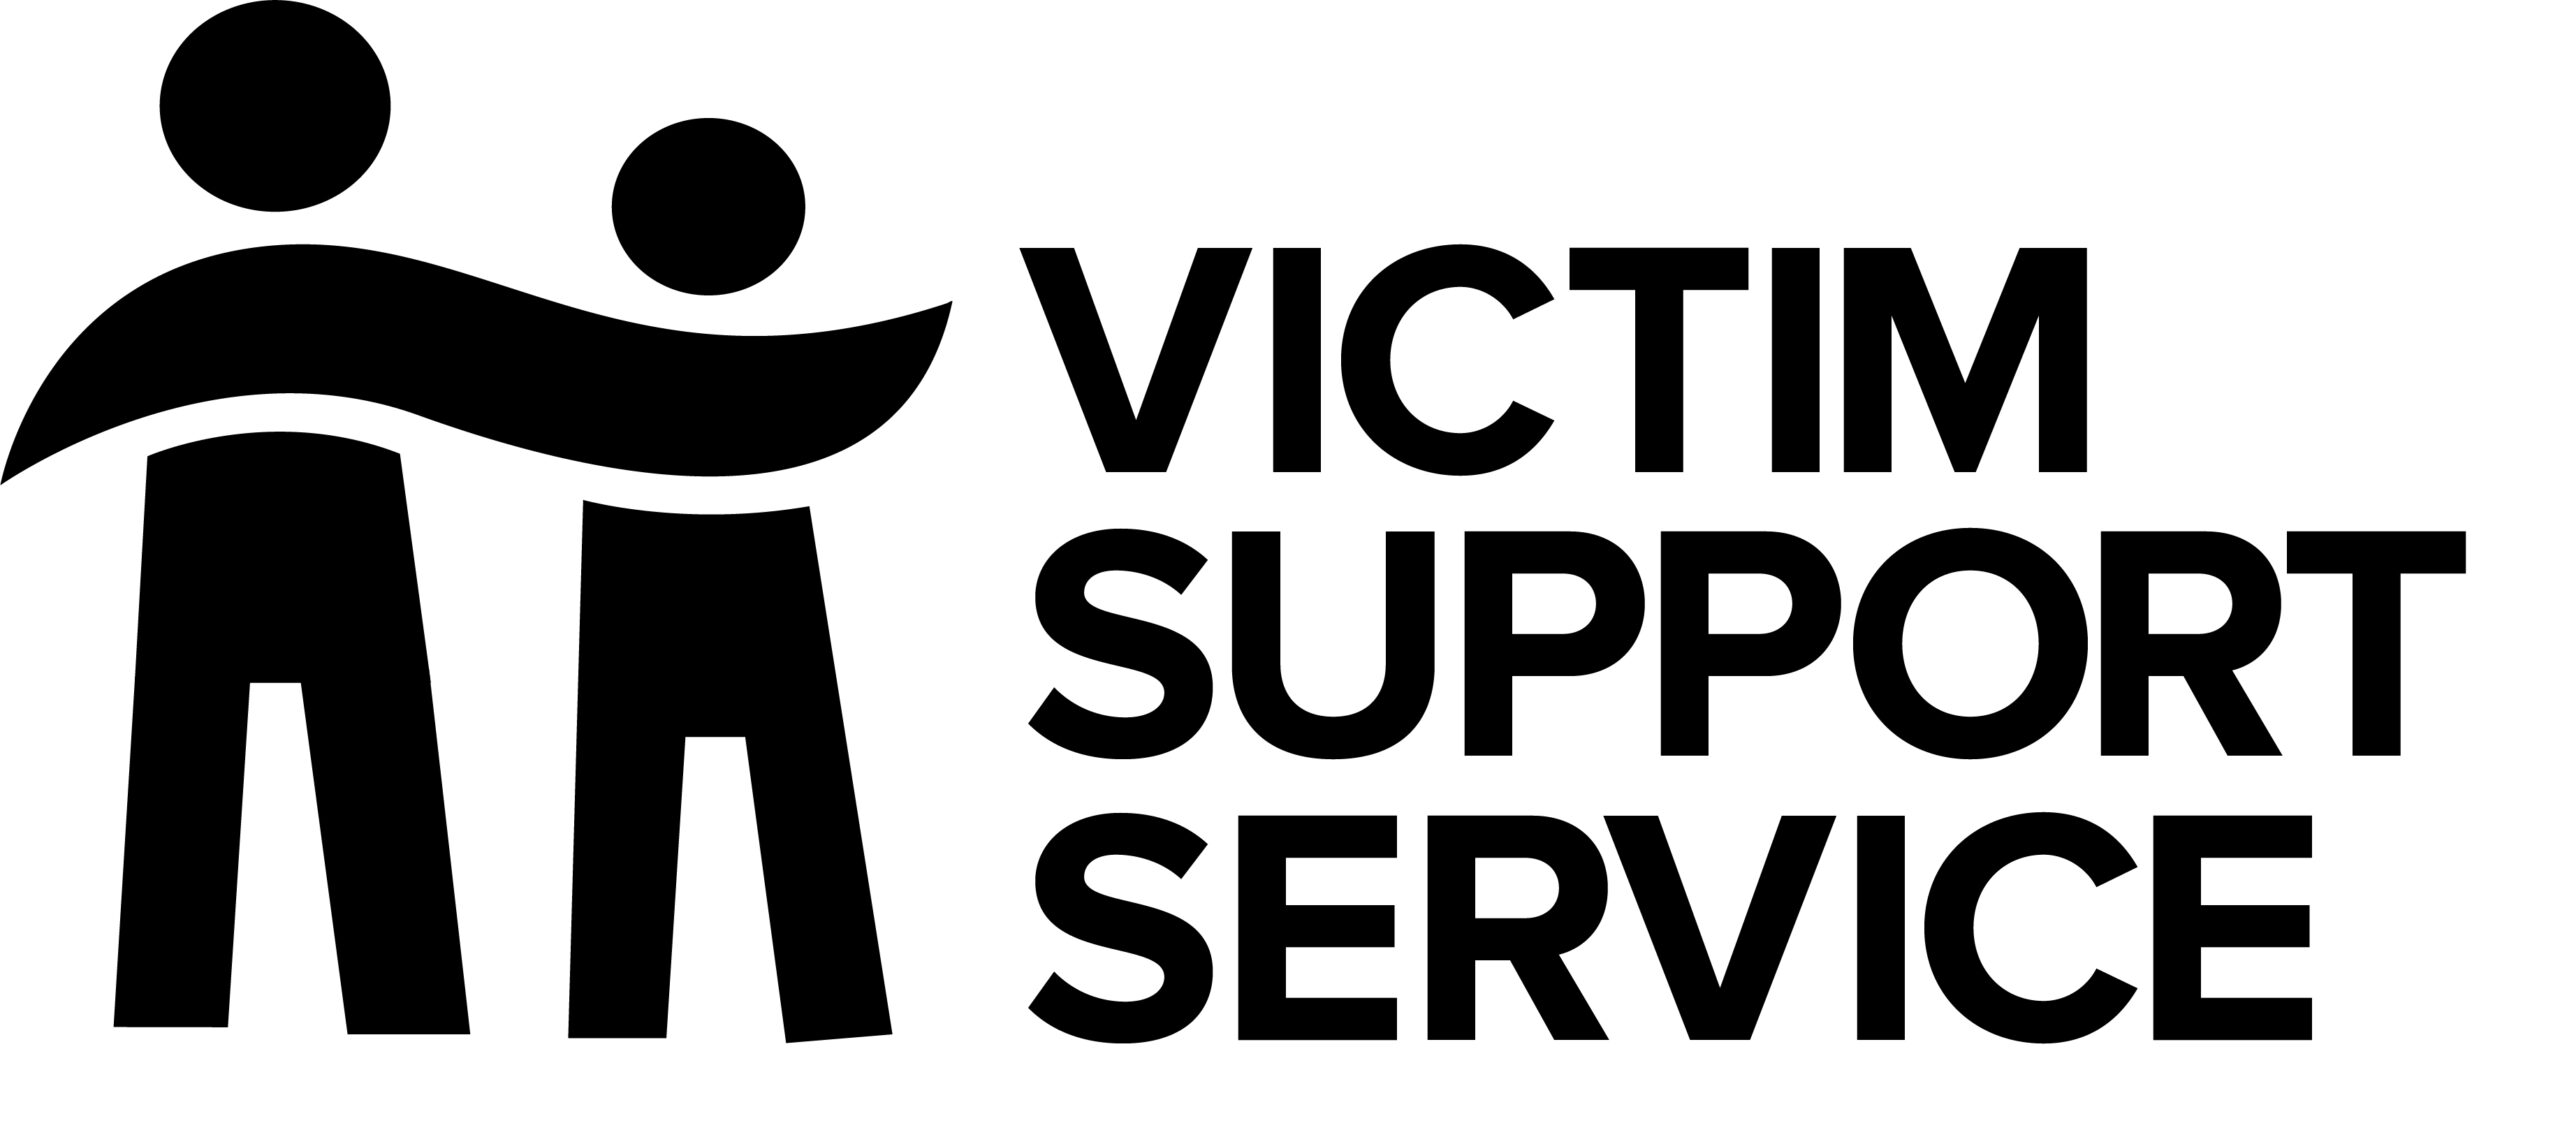 Victim Support Service